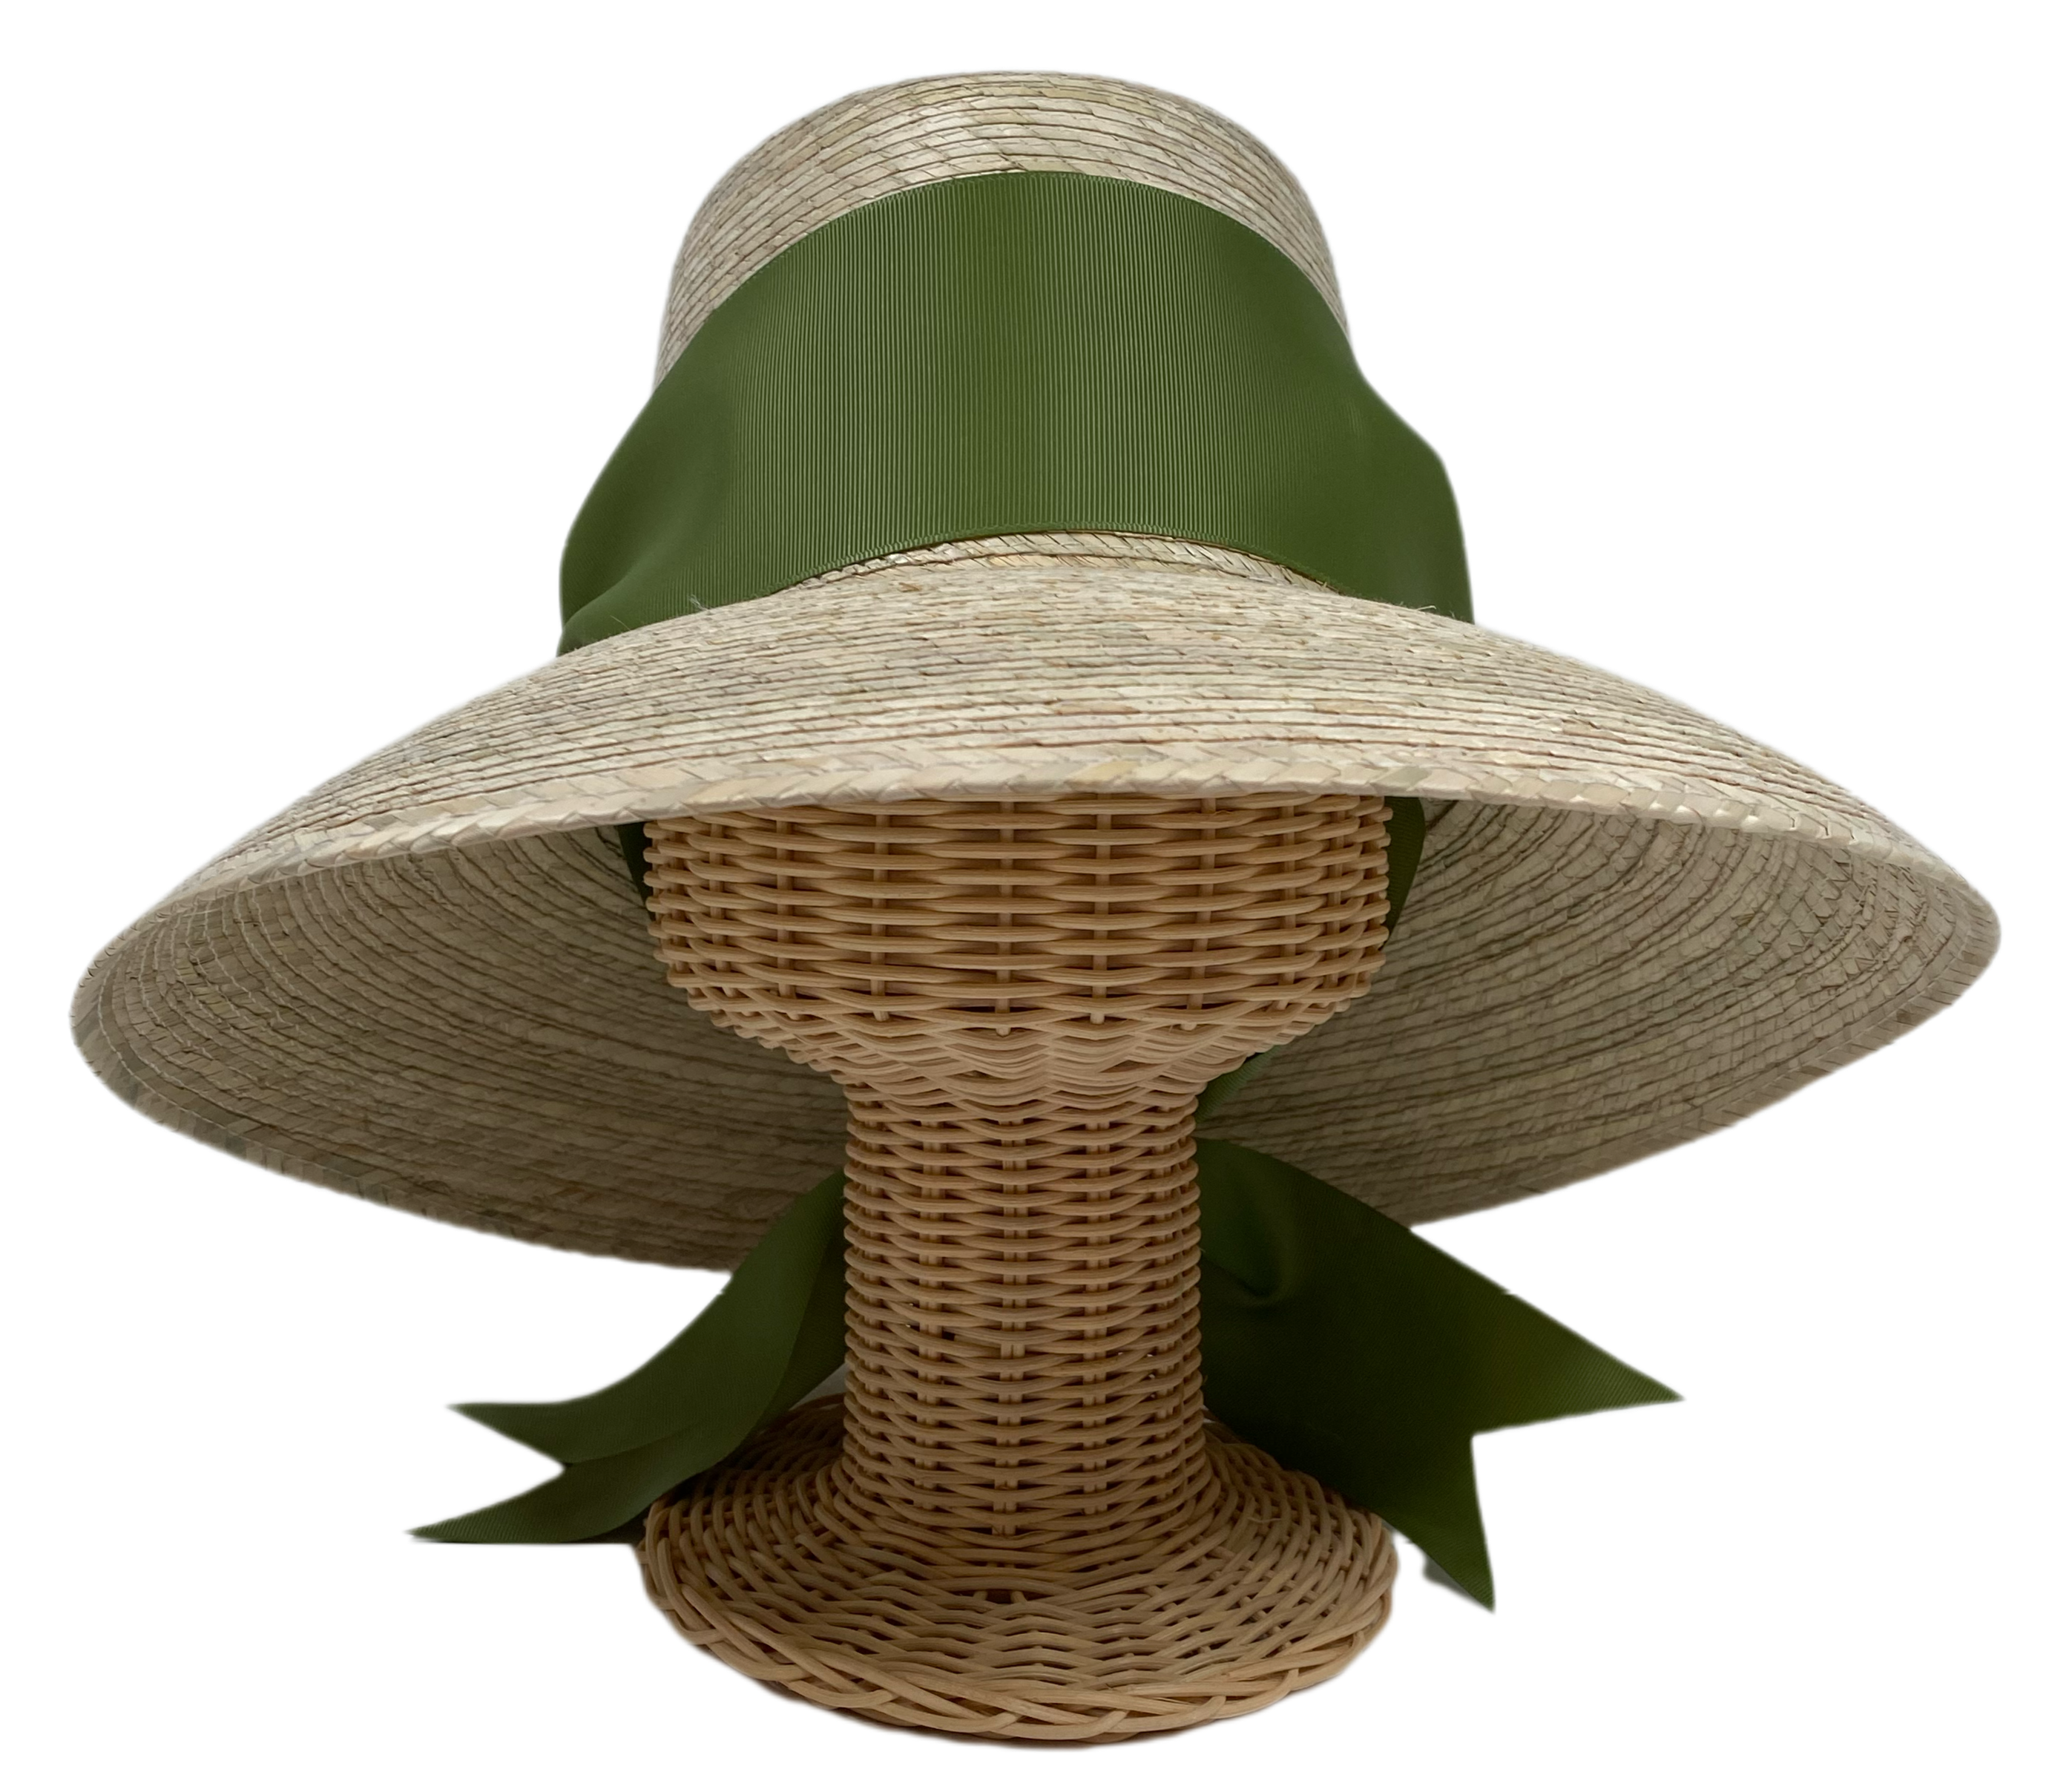 Travel Olive Green Ribbon Straw Hat, Designer Collection